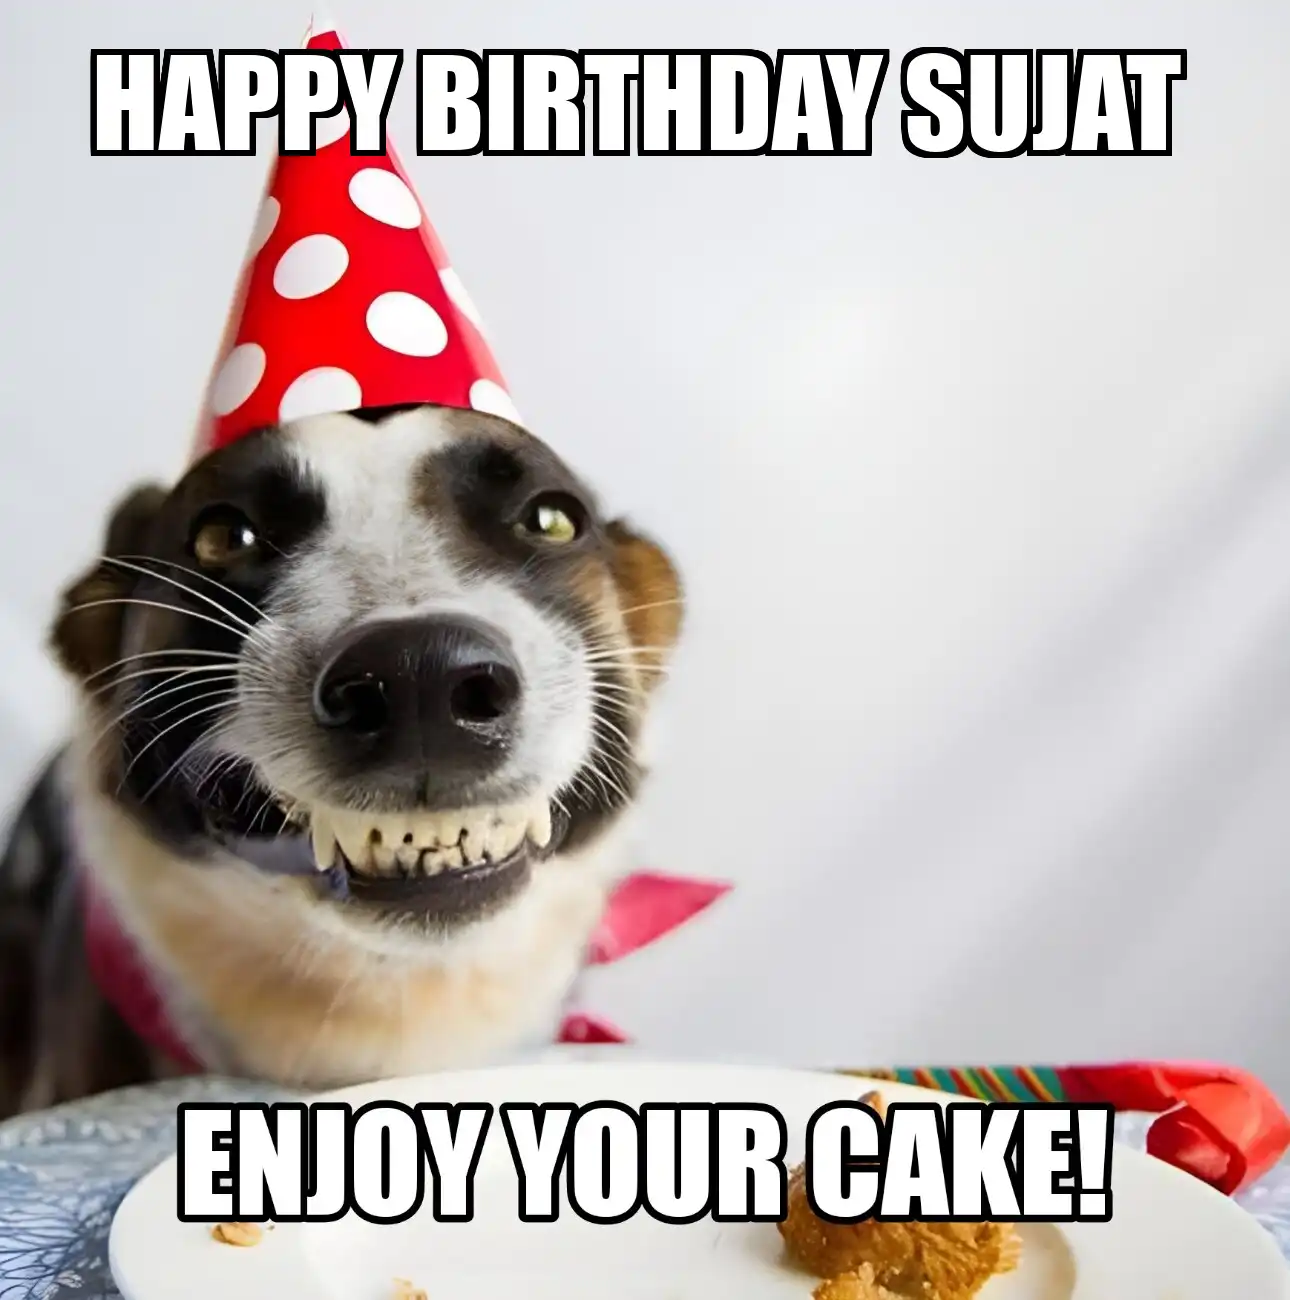 Happy Birthday Sujat Enjoy Your Cake Dog Meme